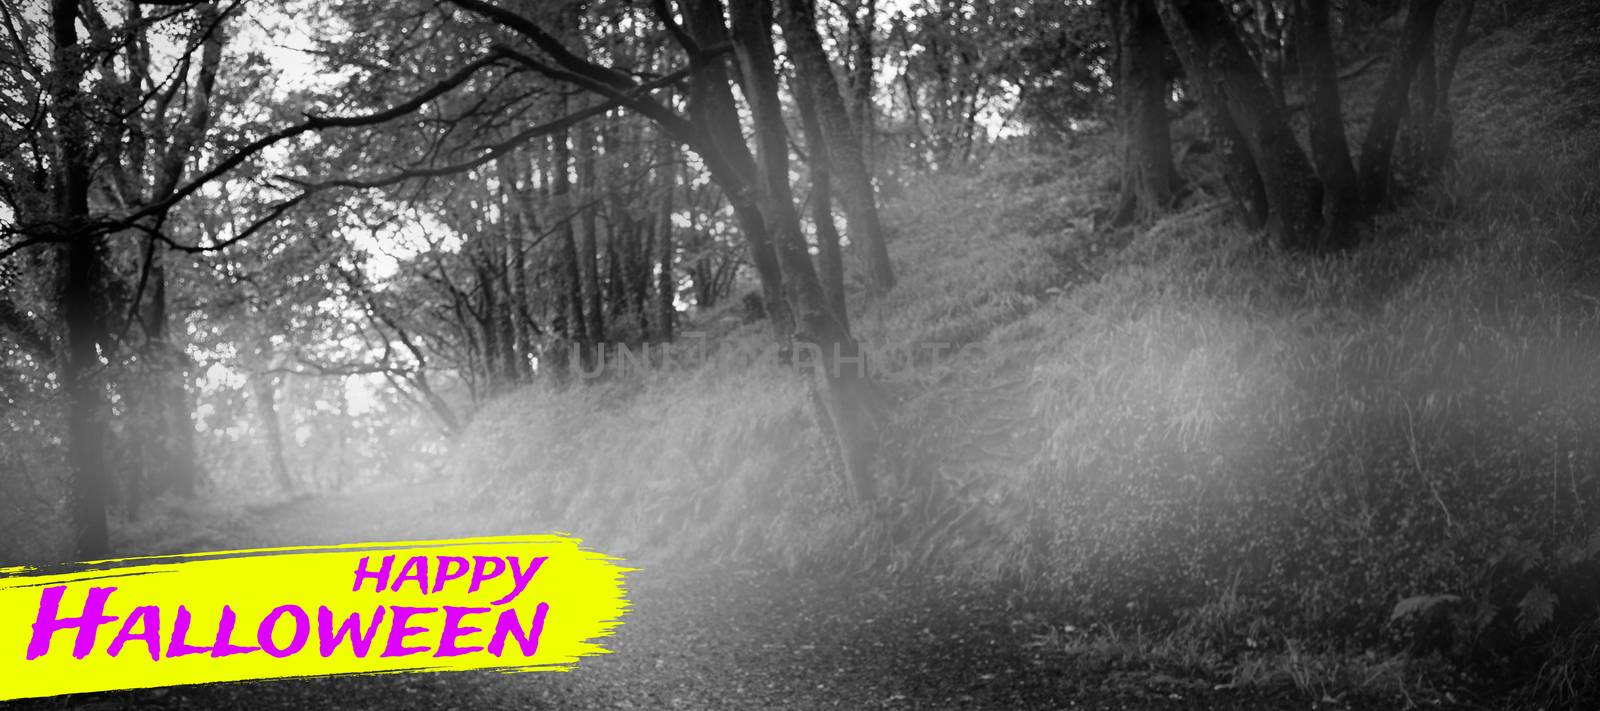 Digital image of happy Halloween text against way between trees